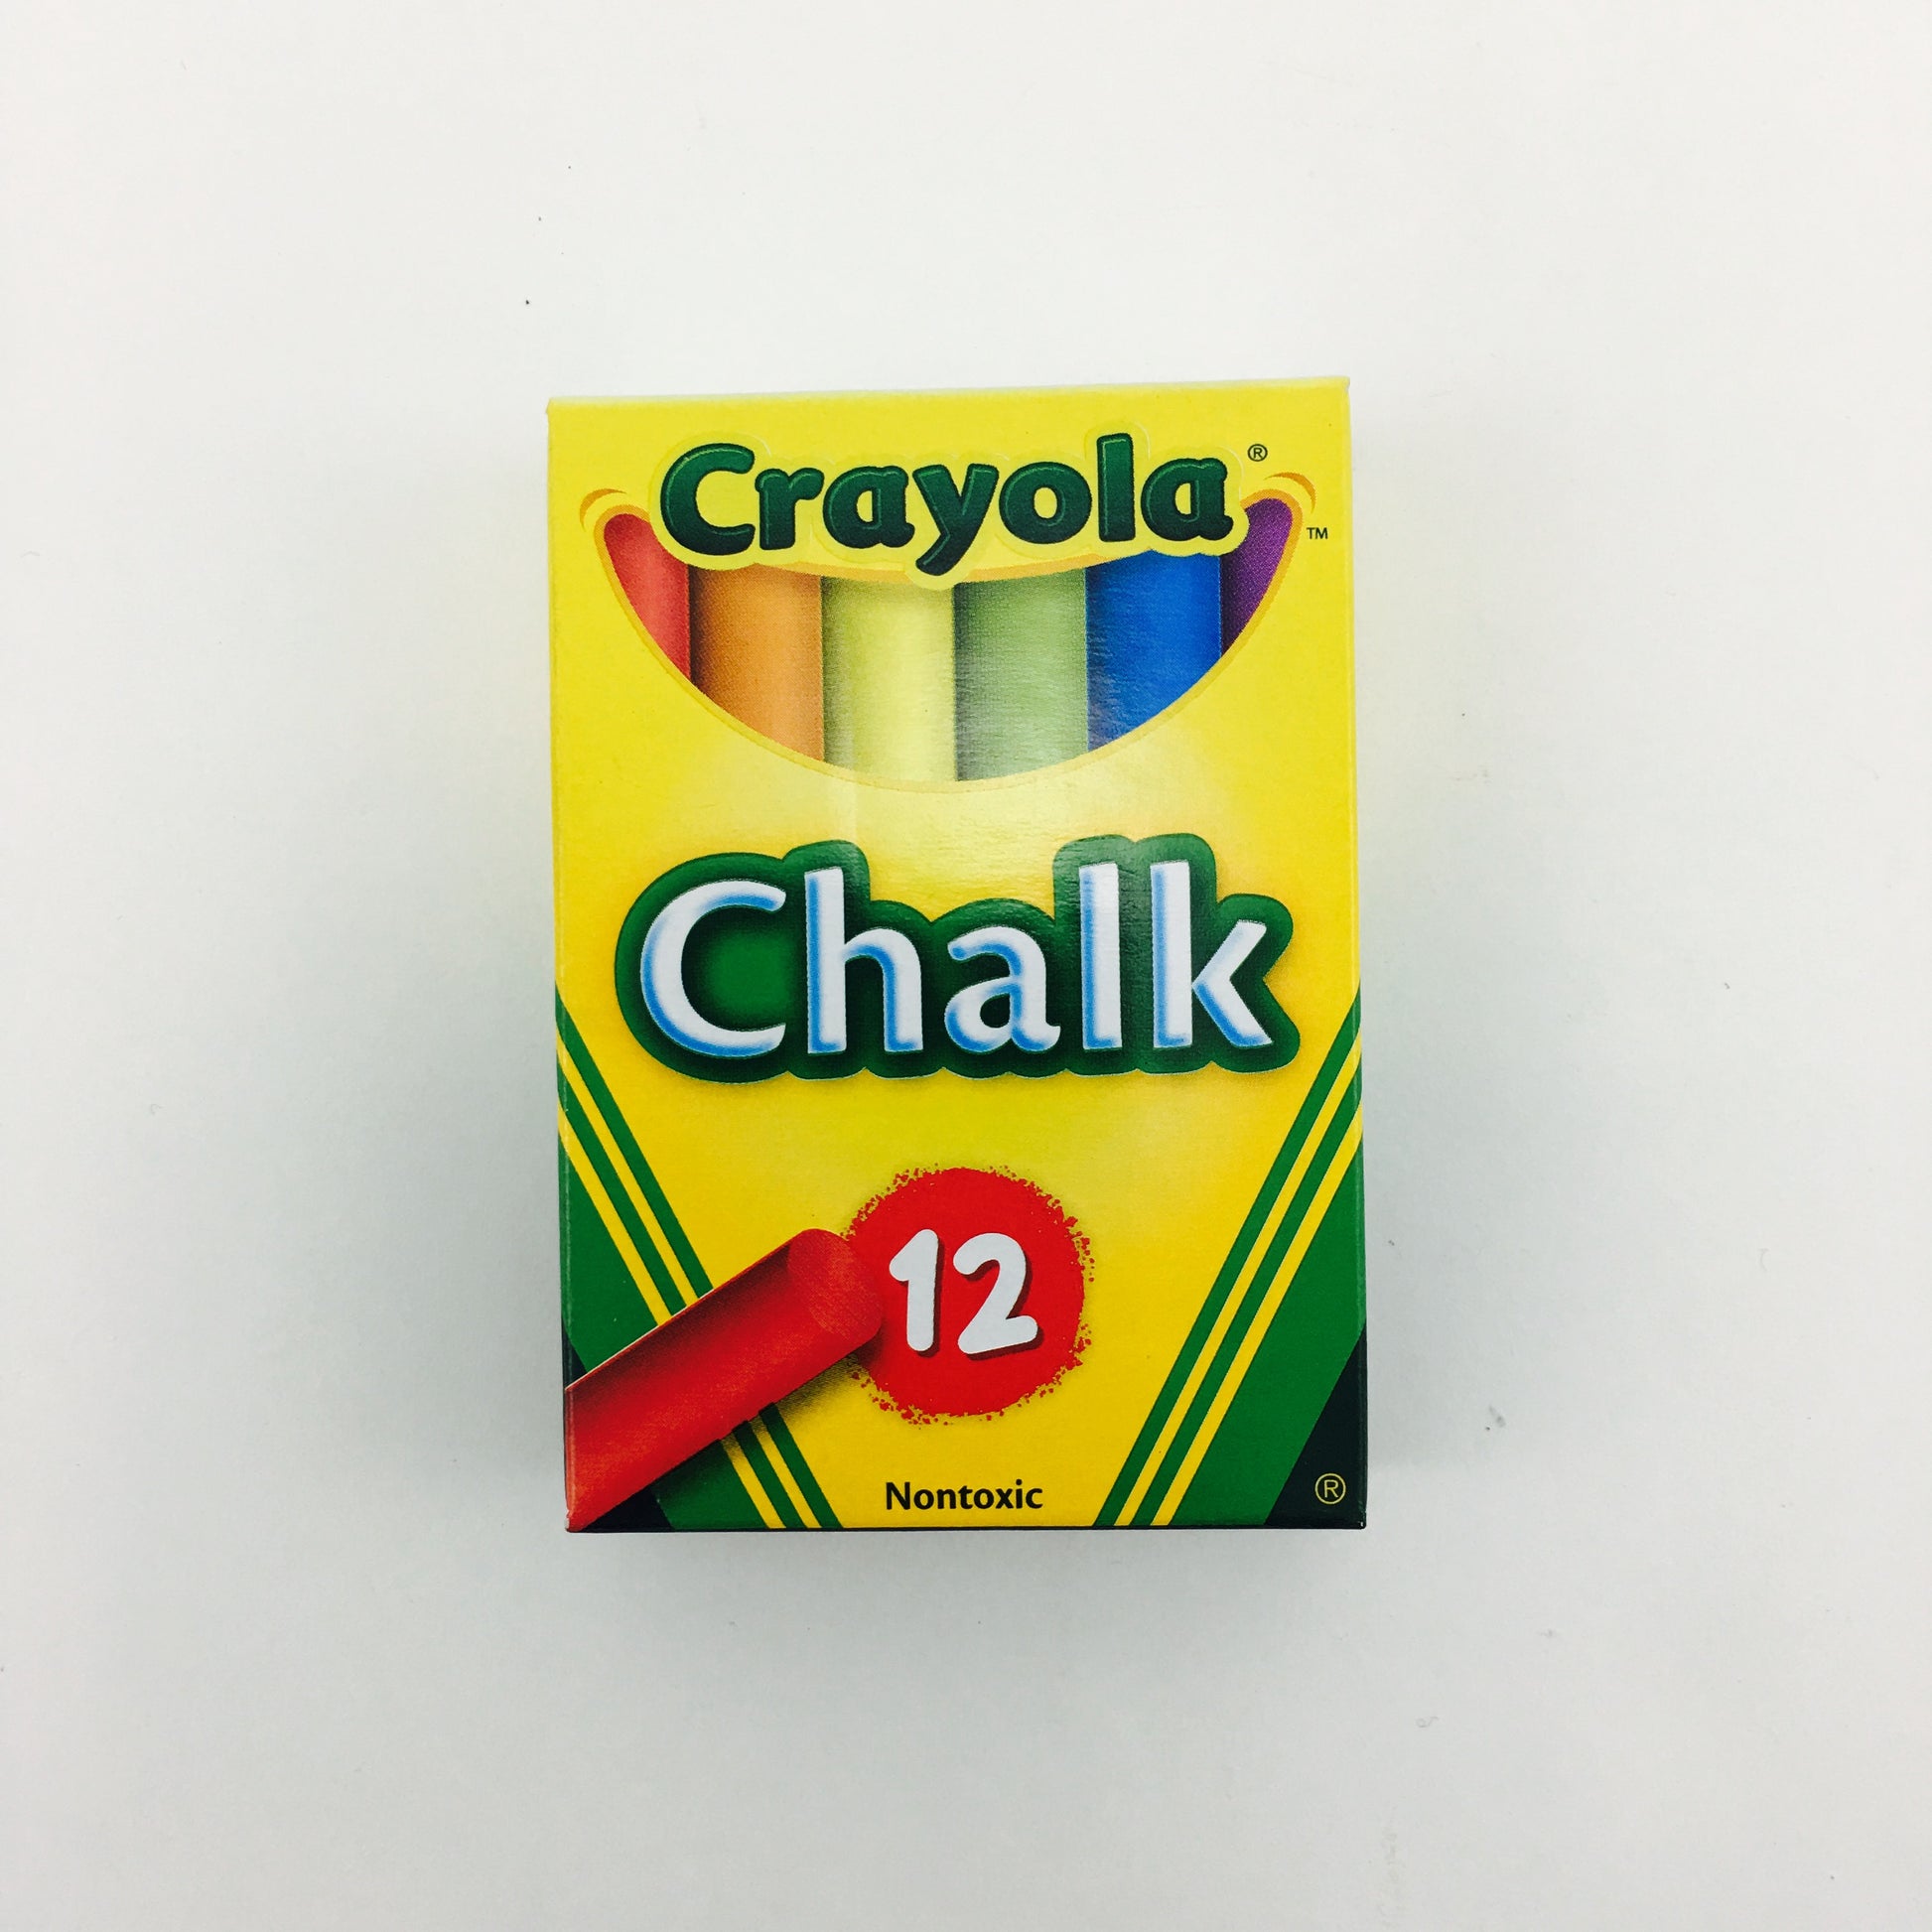 Crayola Chalkboard Chalk Stick Sets - 12/Pack - Assorted Colors by Crayola - K. A. Artist Shop